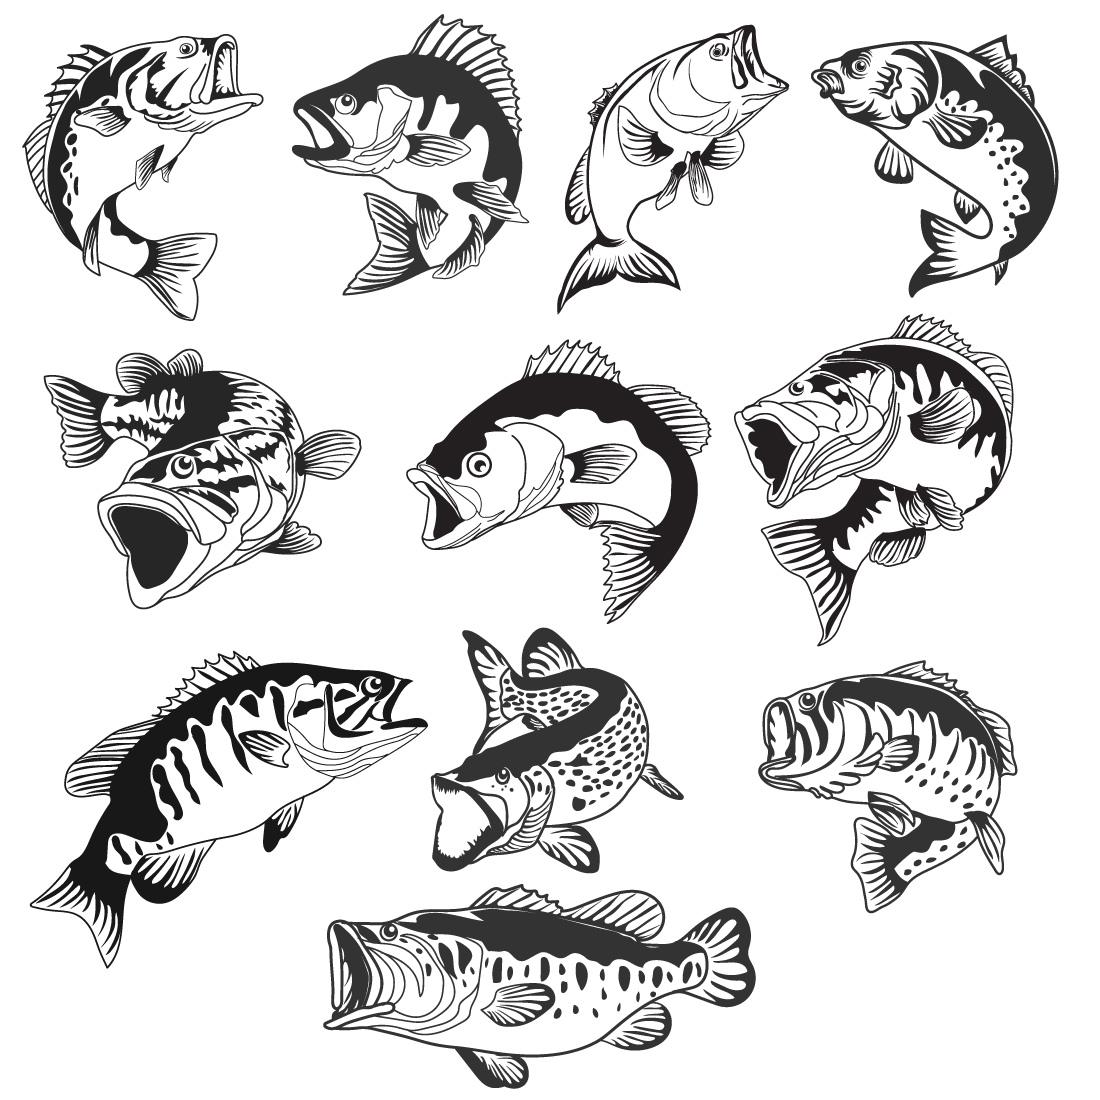 Bass fish vector illustration - MasterBundles